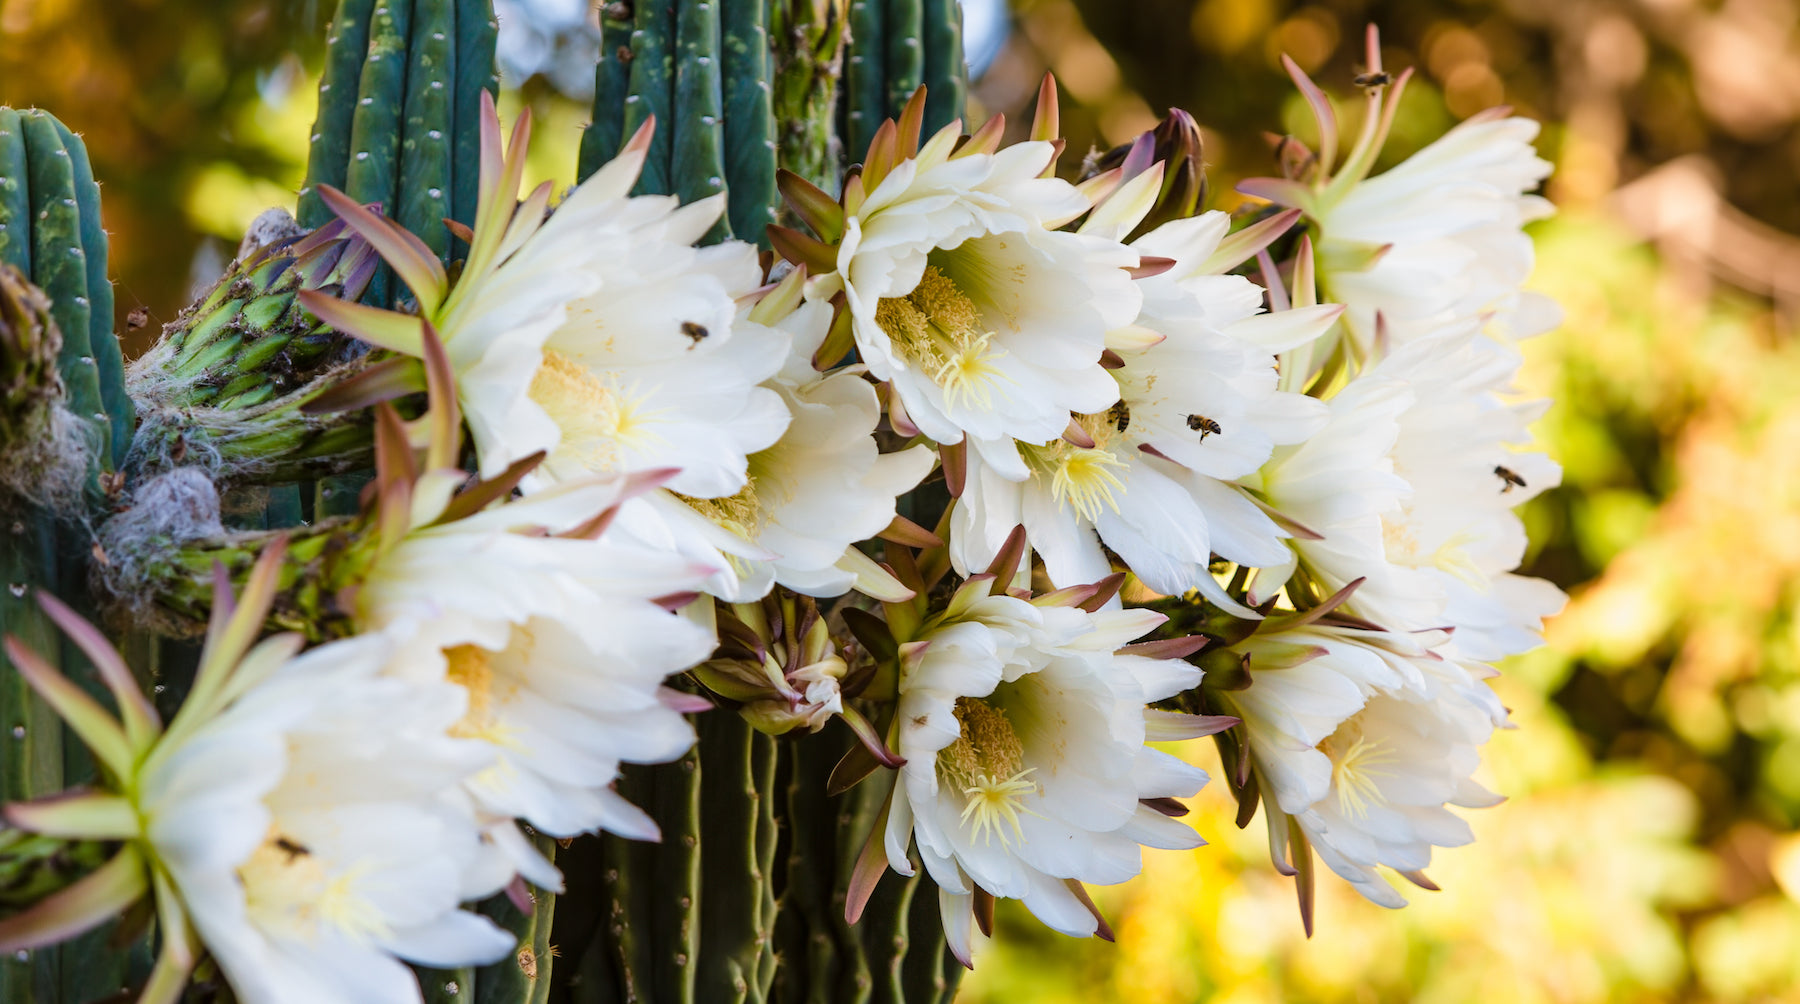 night blooming cereus cactus flower LOTUSWEI flower essences